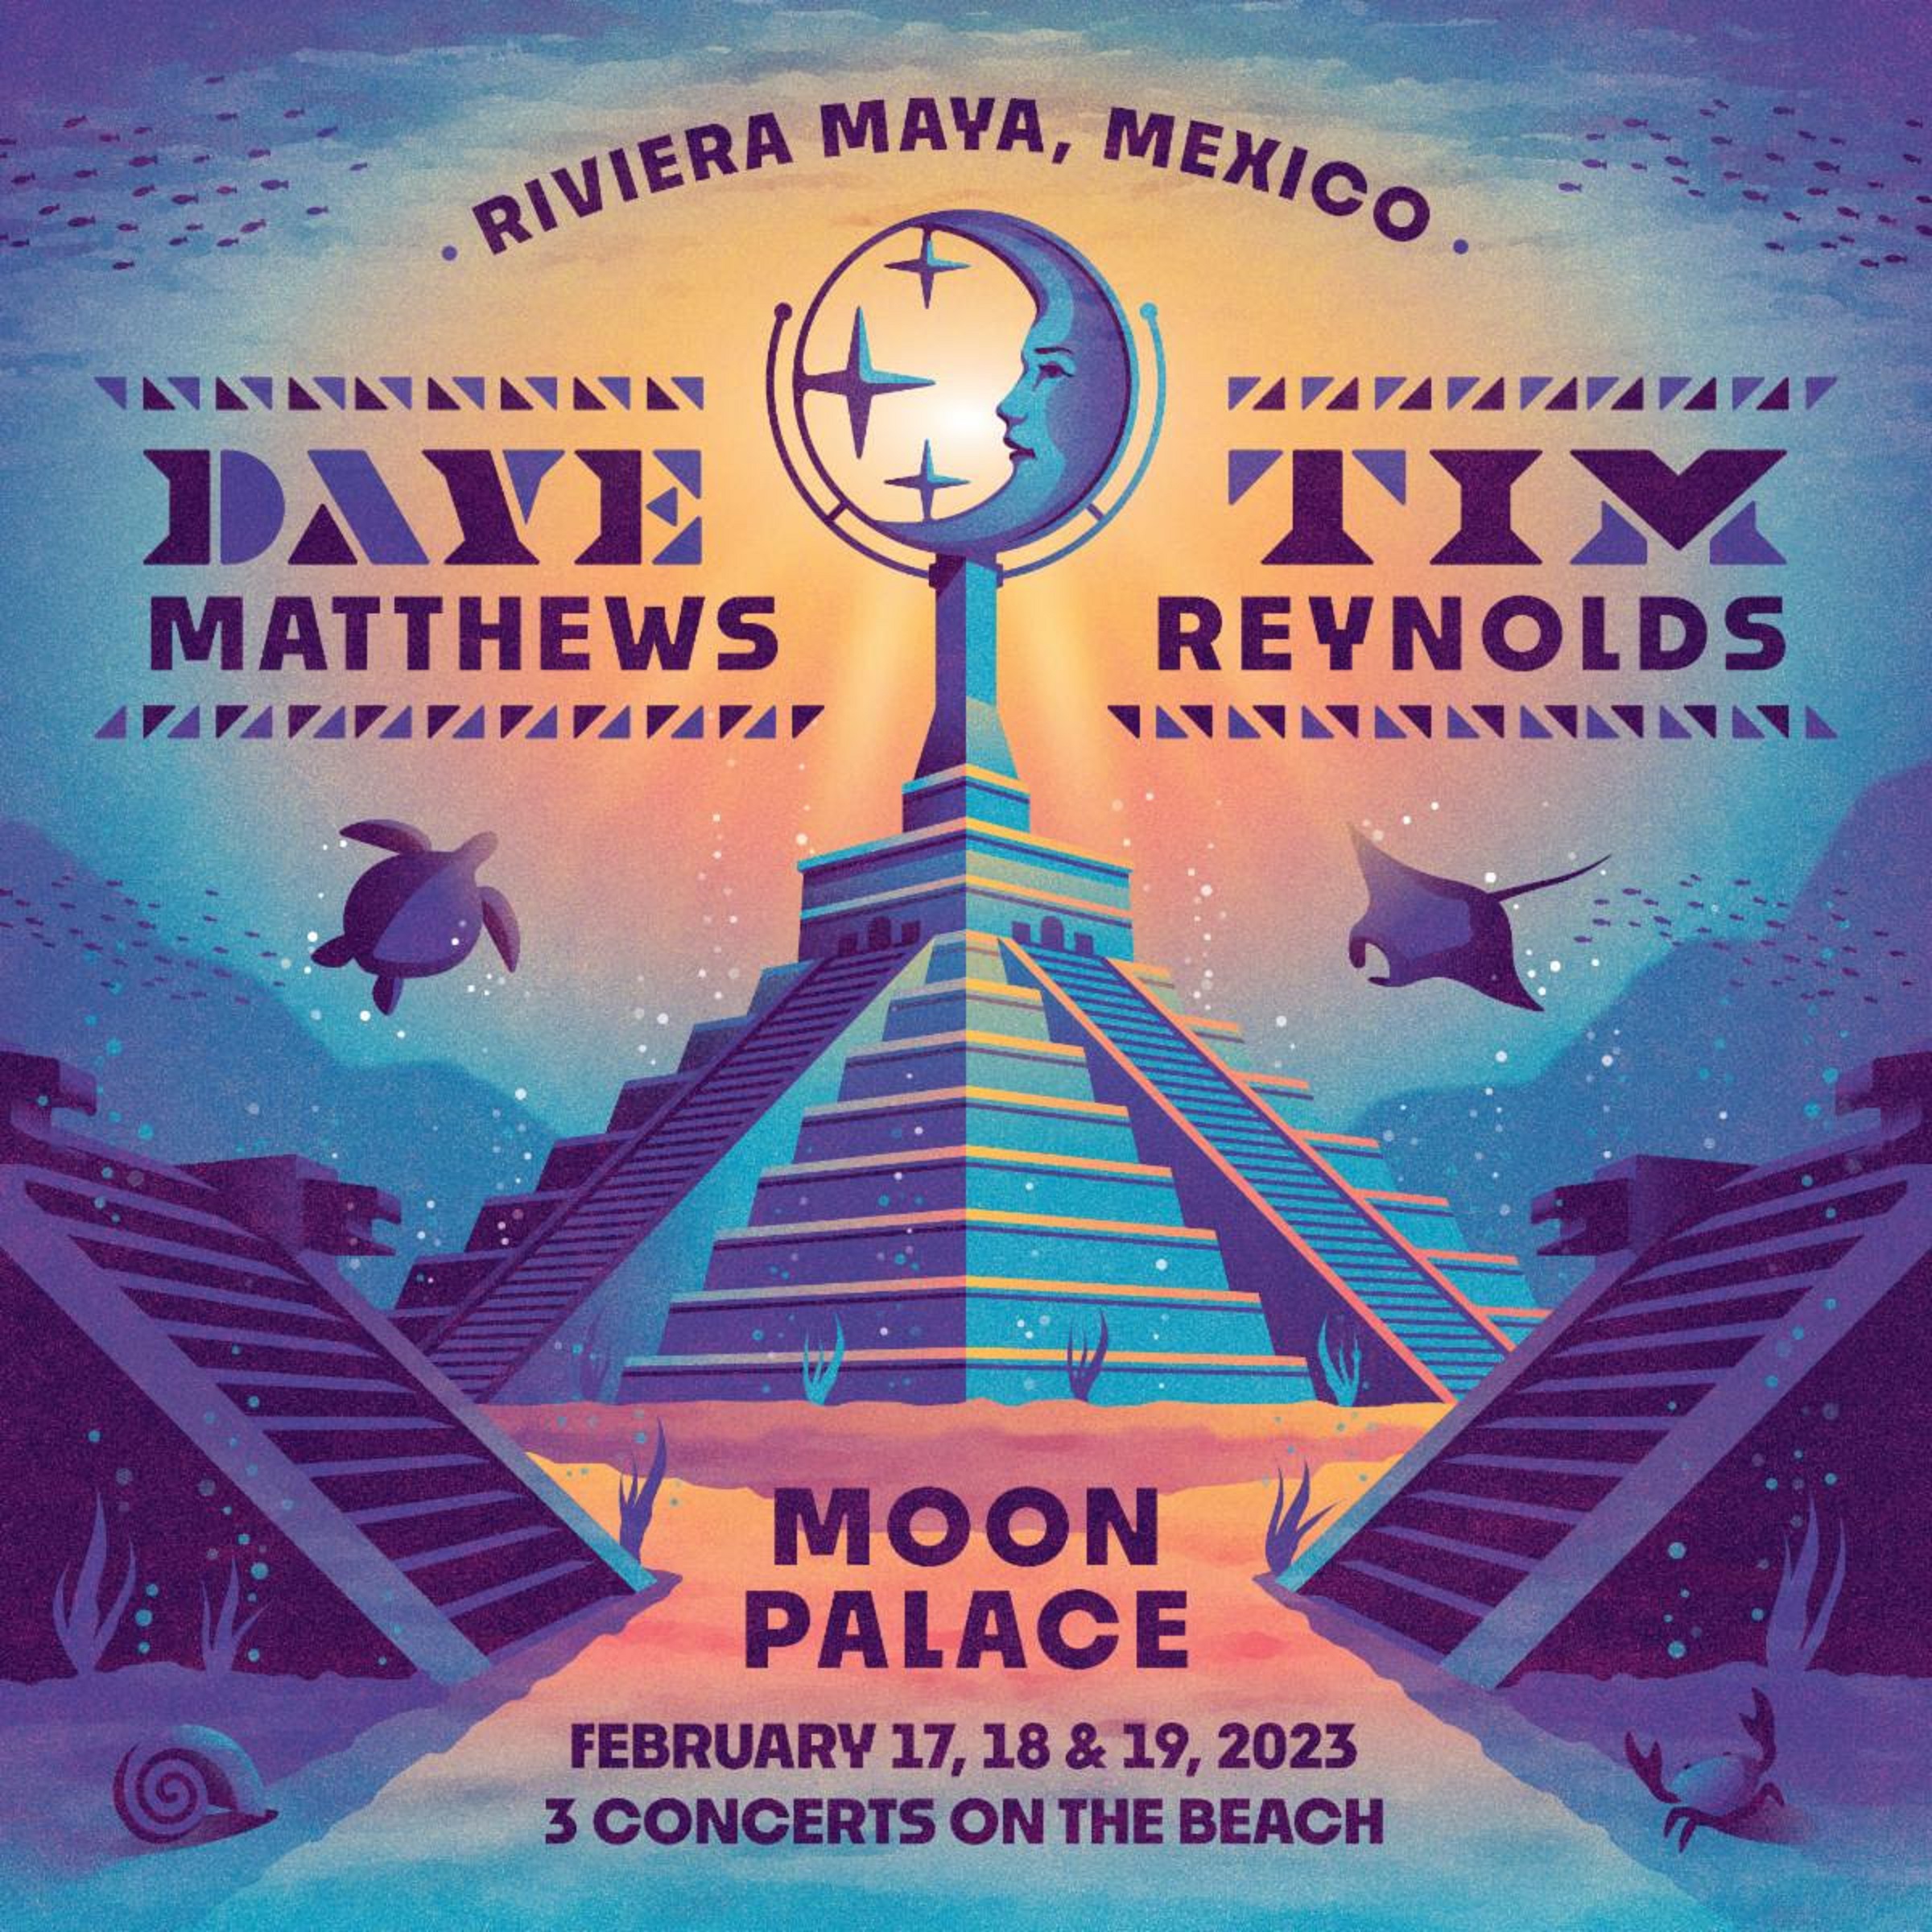 Dave Matthews And Tim Reynolds Announce Sixth Annual Riviera Maya